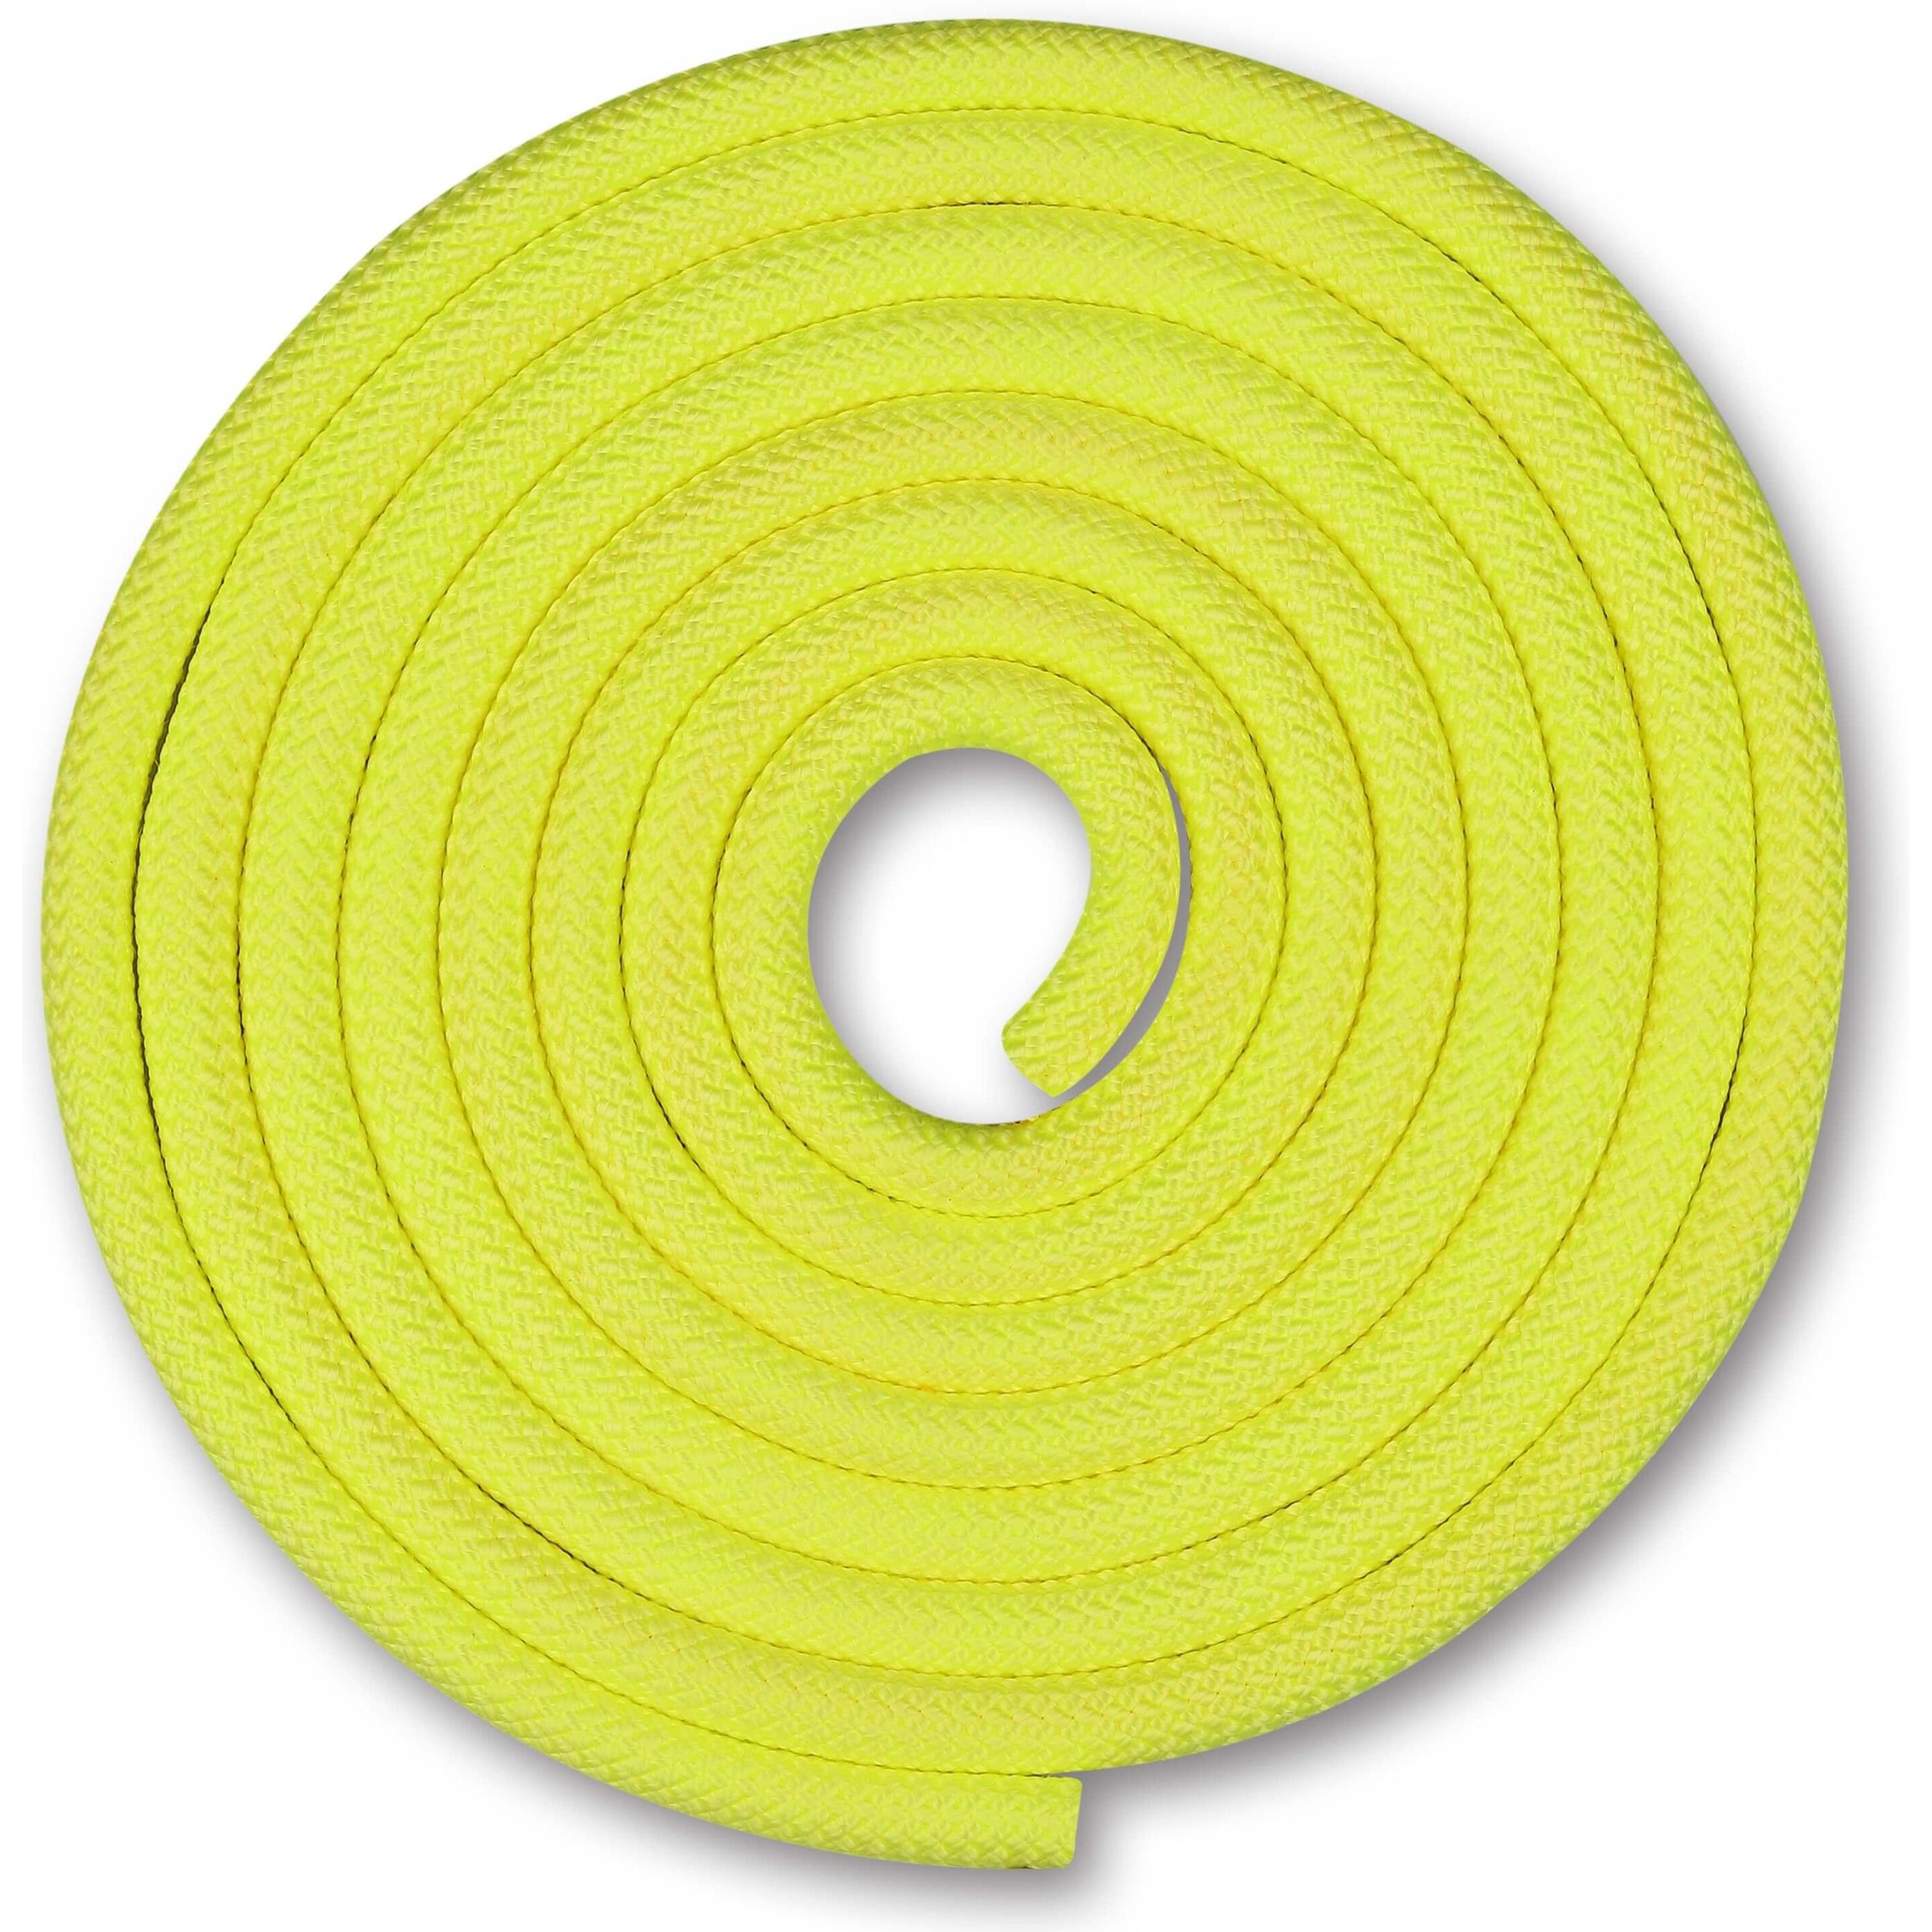 Cuerda Para Gimnasia Rítmica Ponderada 150g Indigo 2,5 M - amarillo-fluor - 